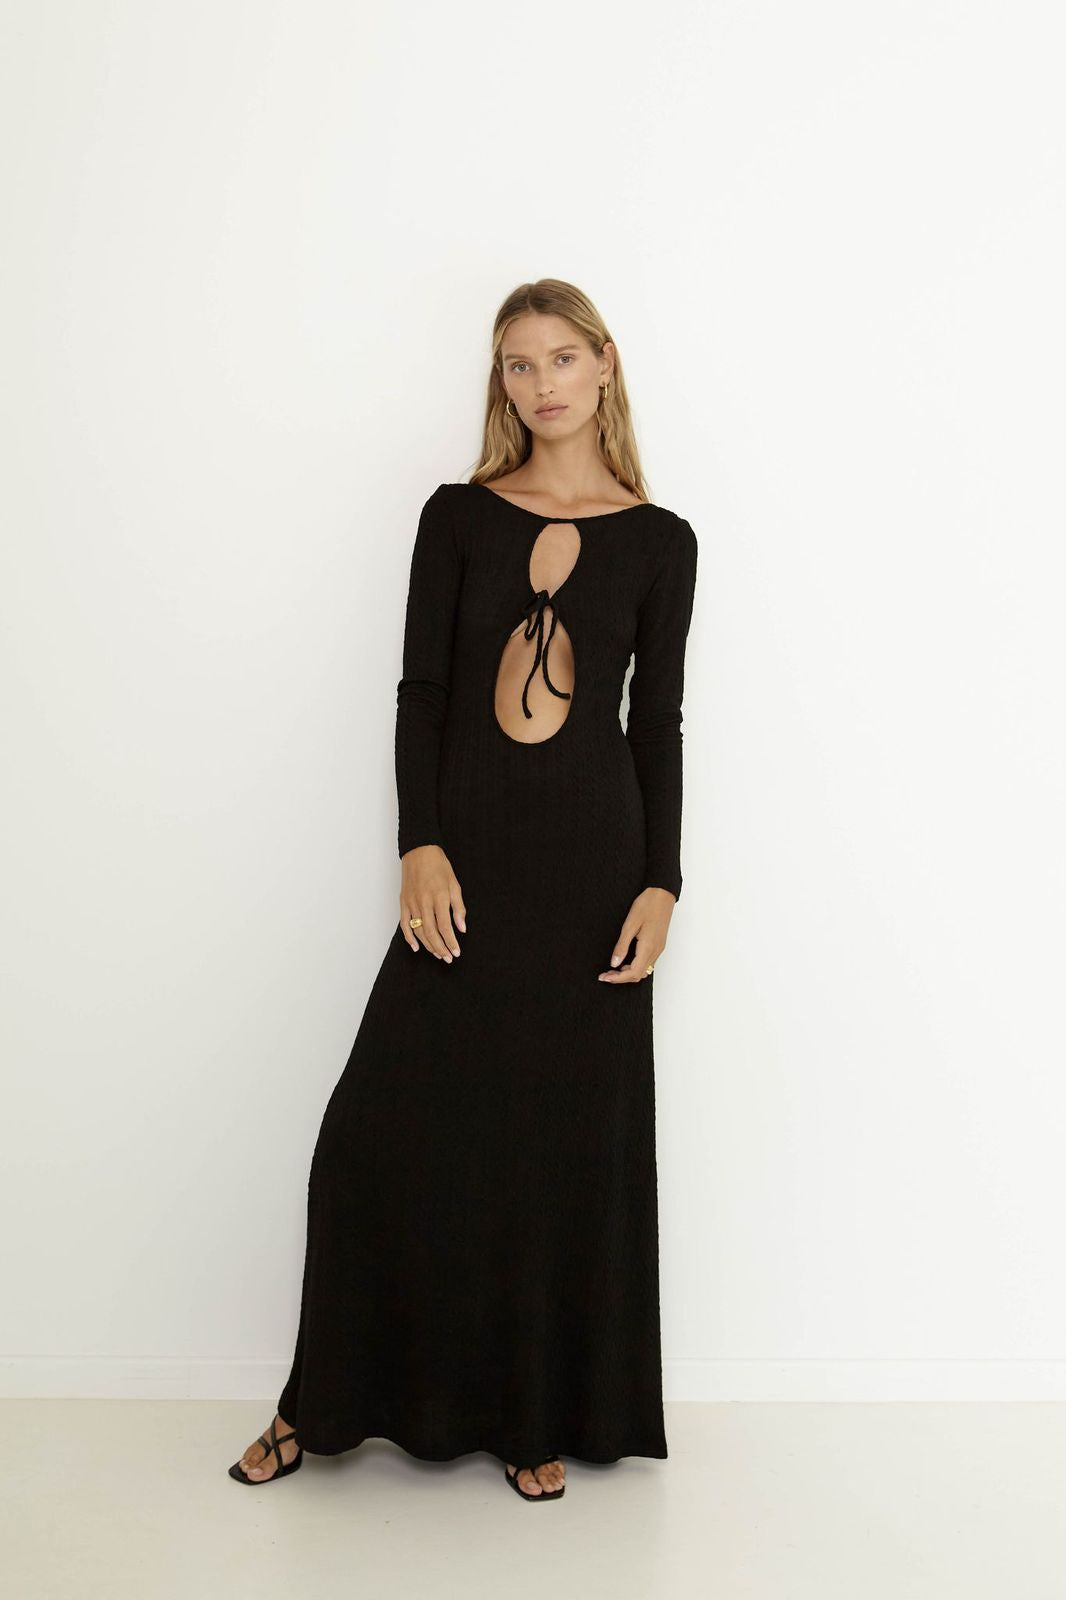 Tallulah Maxi Dress in Black by SNDYS